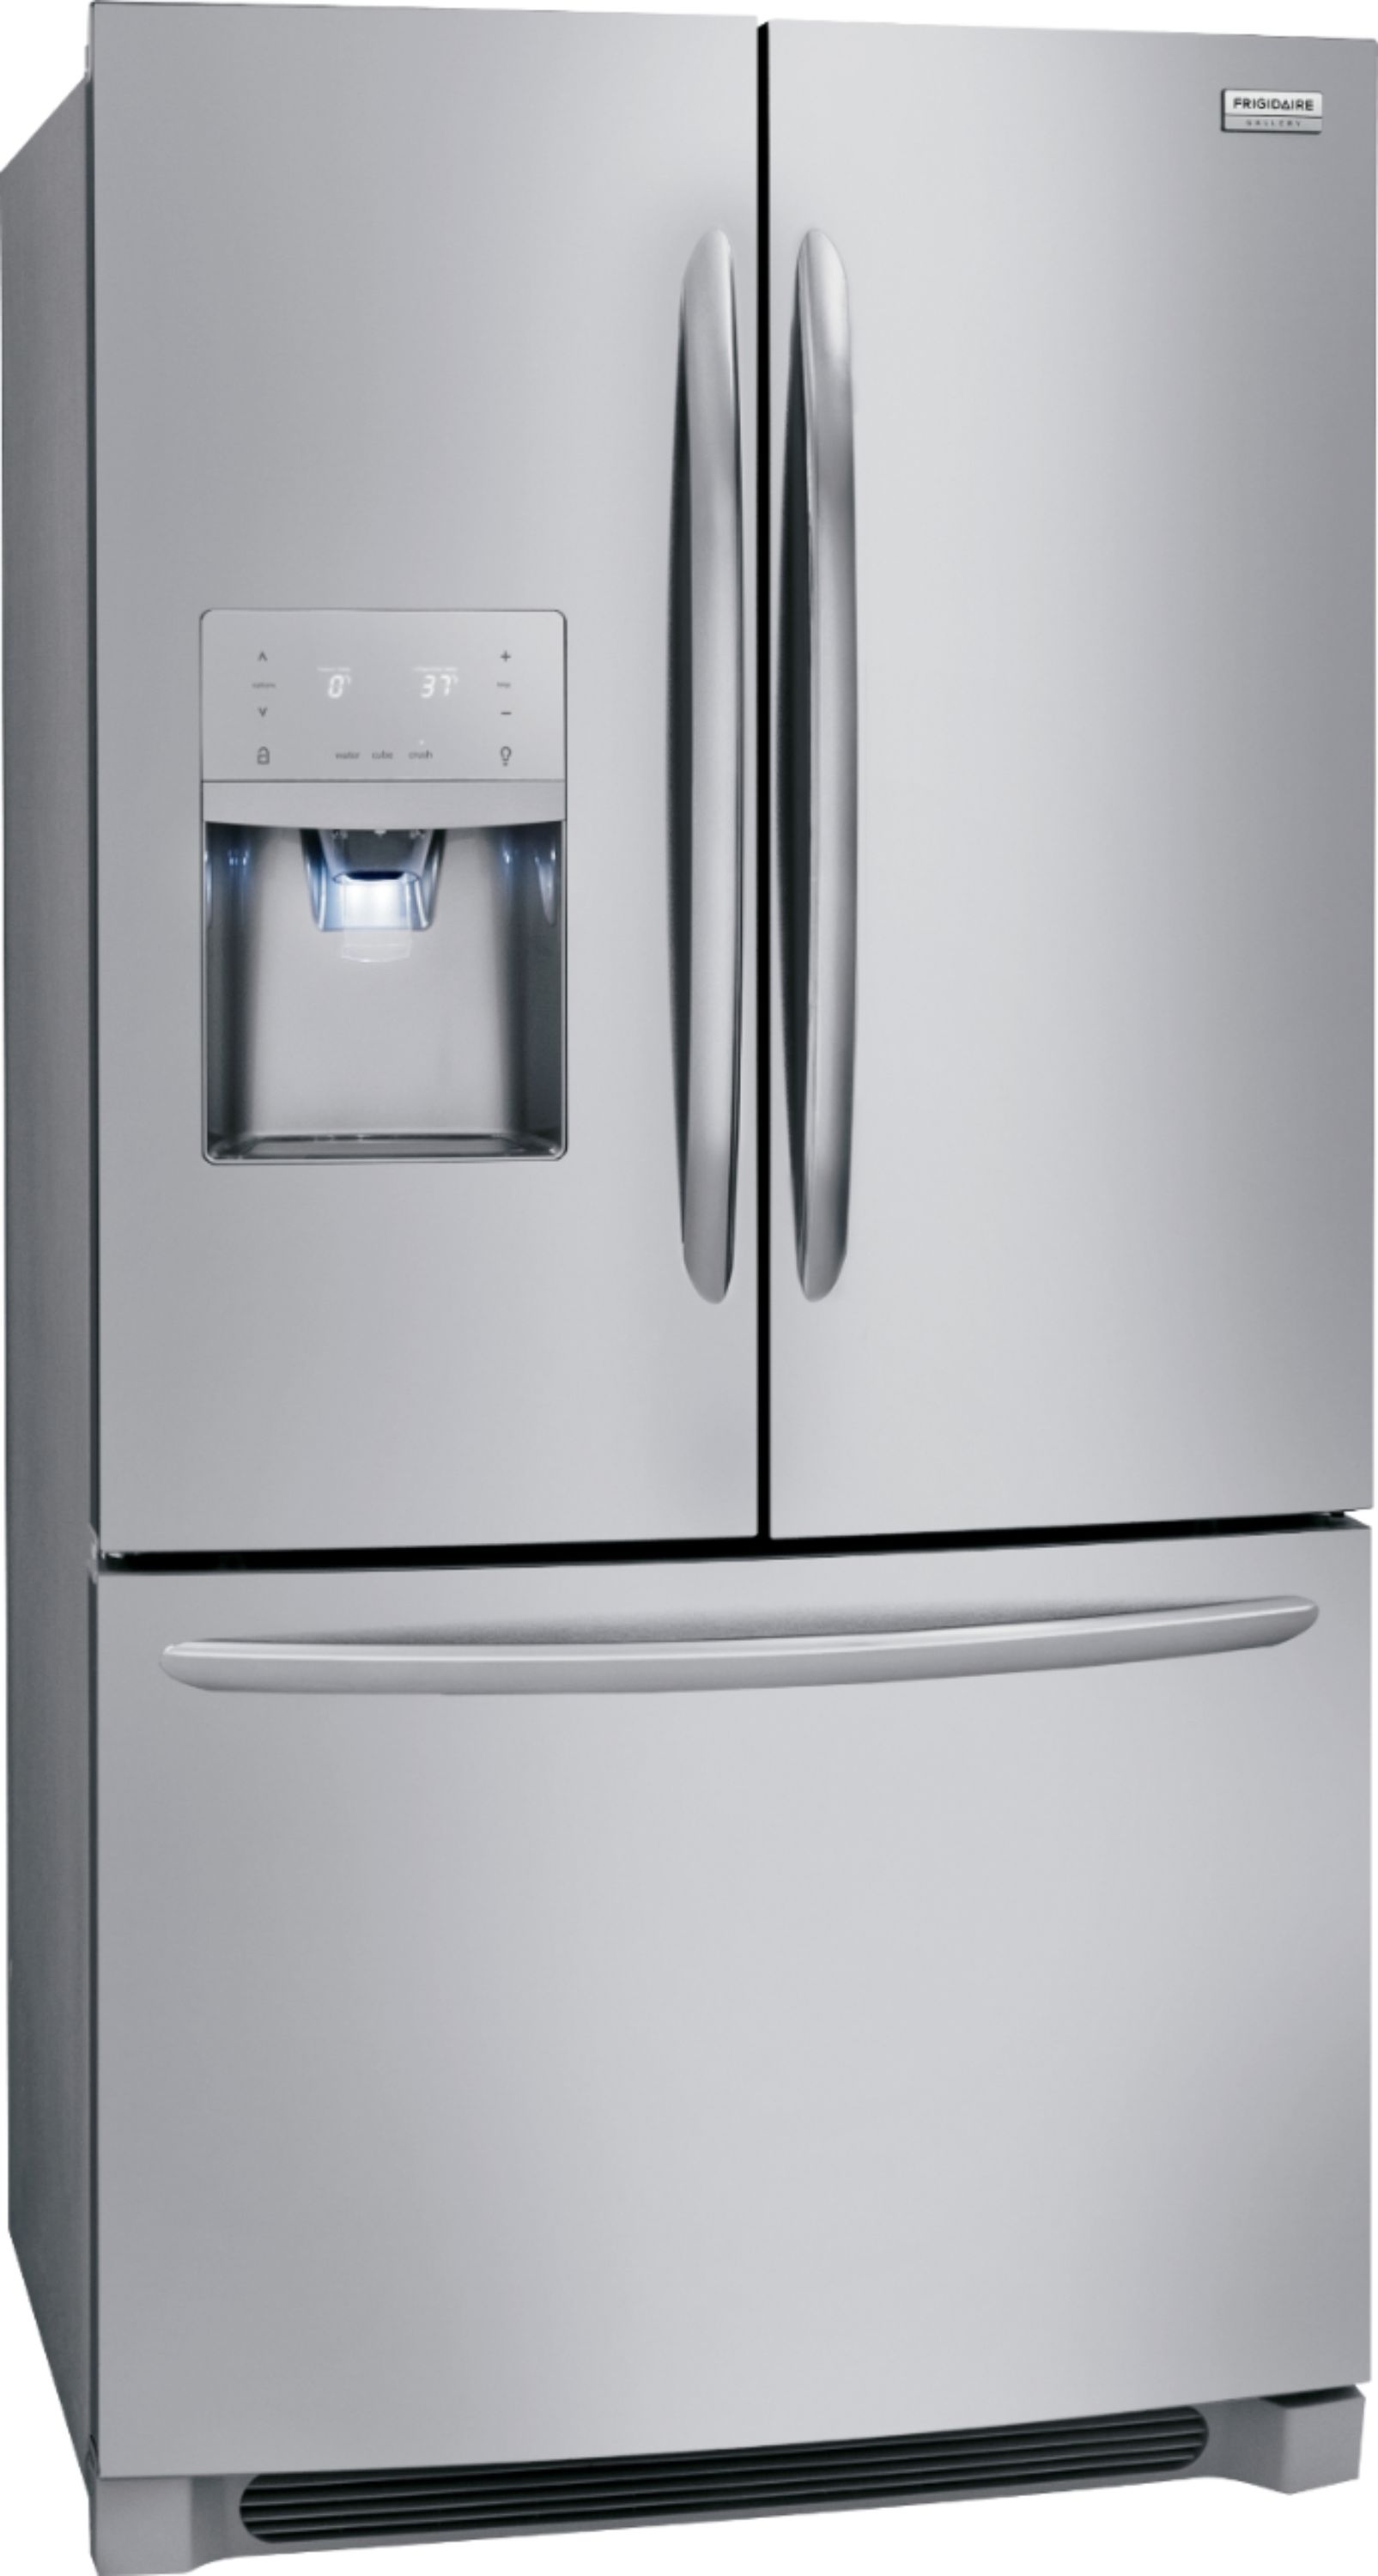 39++ Frigidaire refrigerator keeps resetting to 1 info